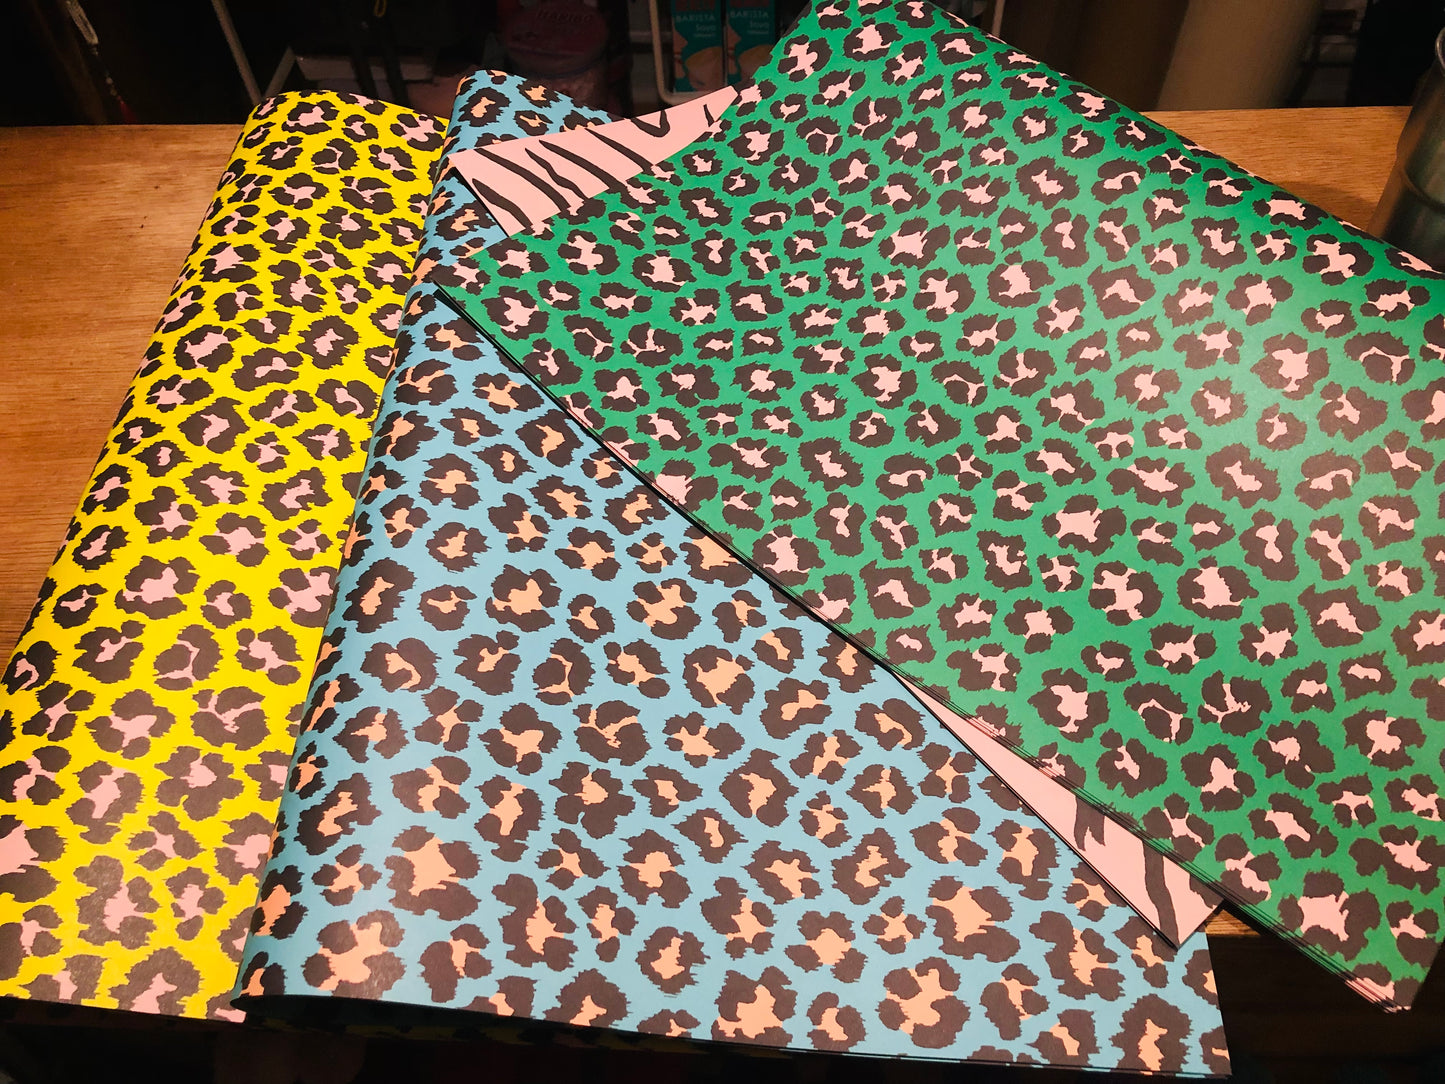 Leopard print wrap